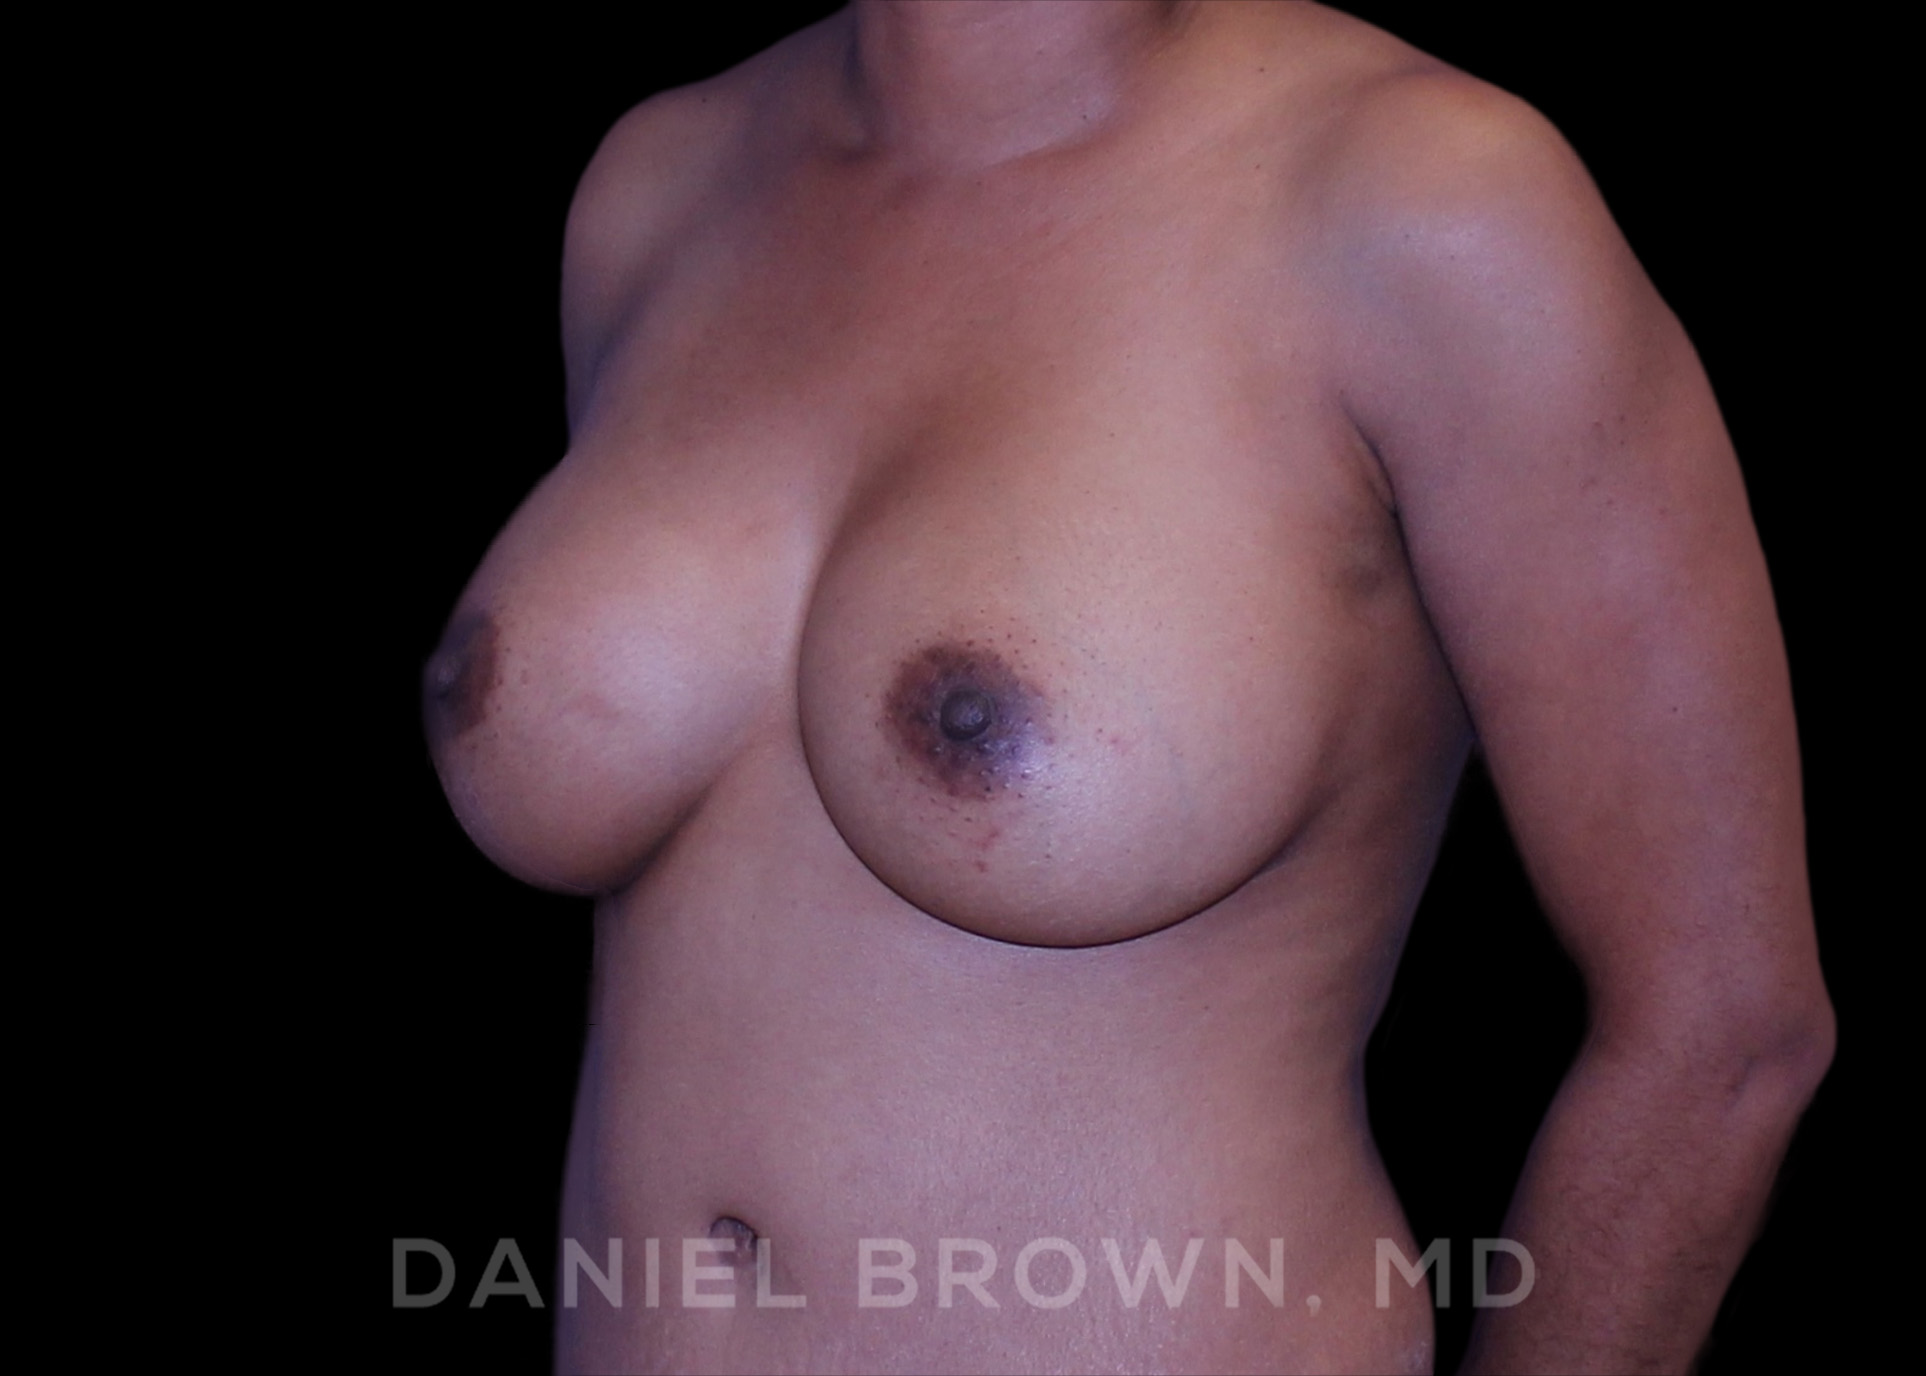 Breast Augmentation Patient Photo - Case 2349 - after view